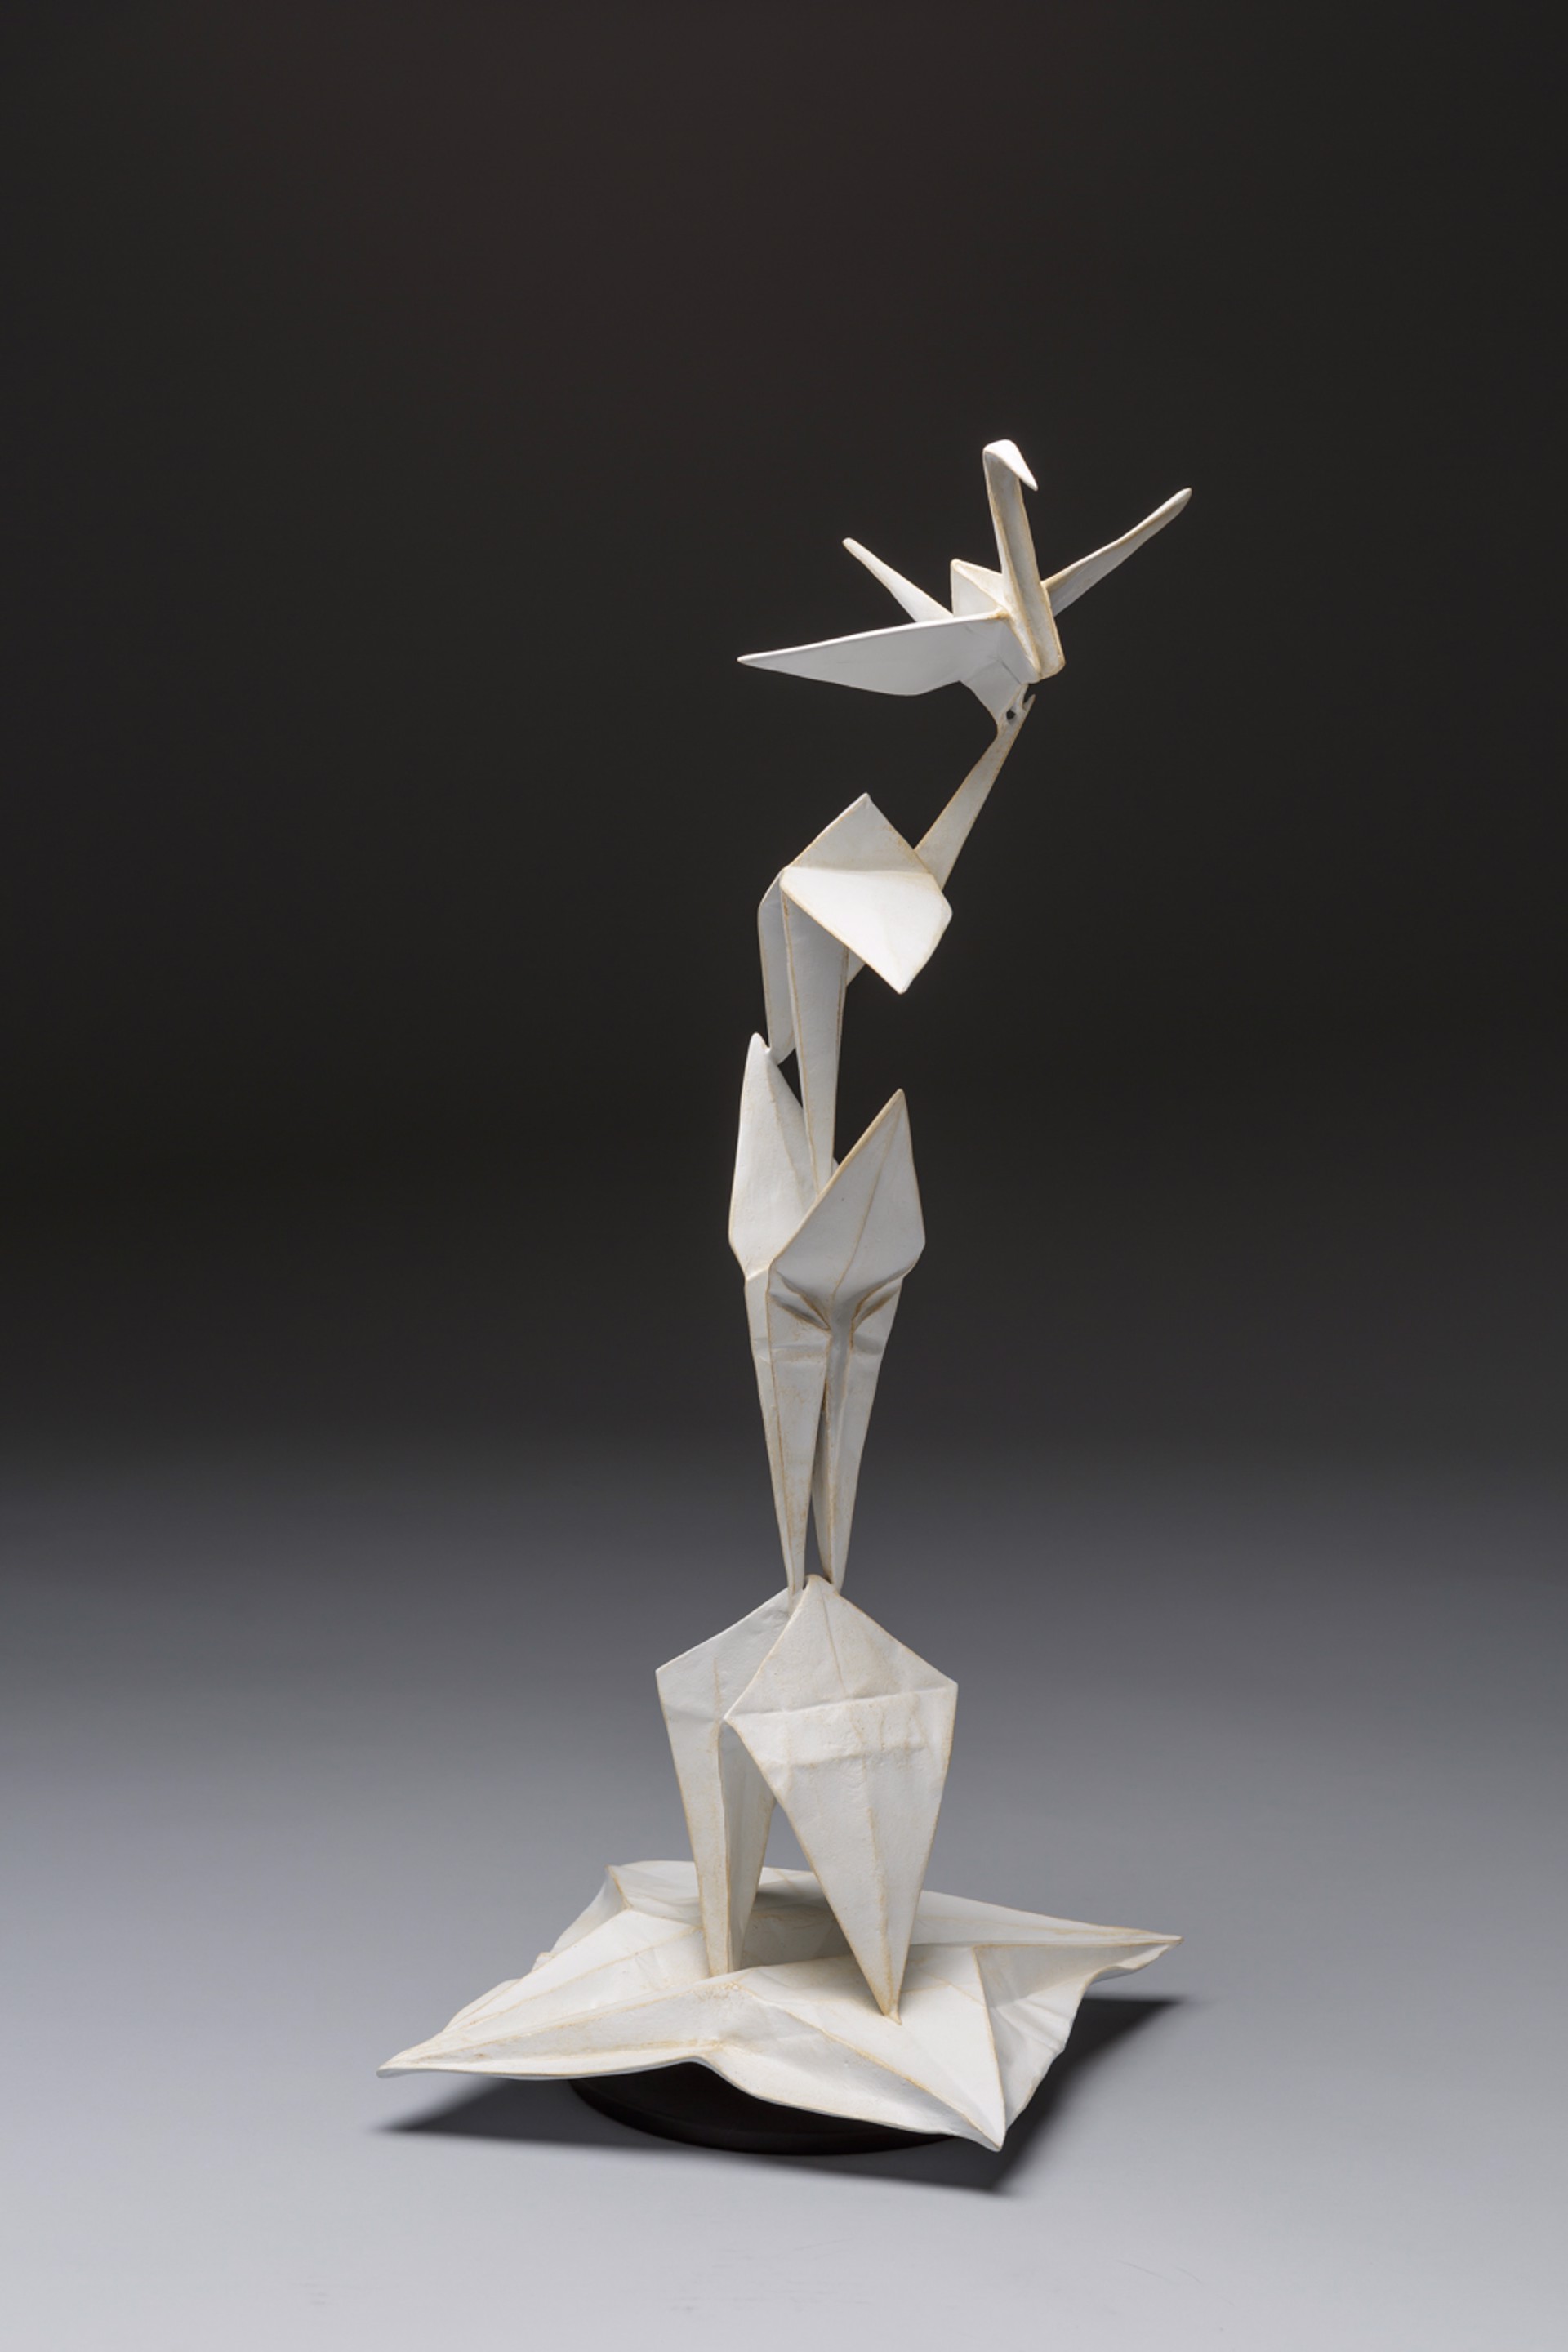 Unfolding Cranes by Kevin Box Studio